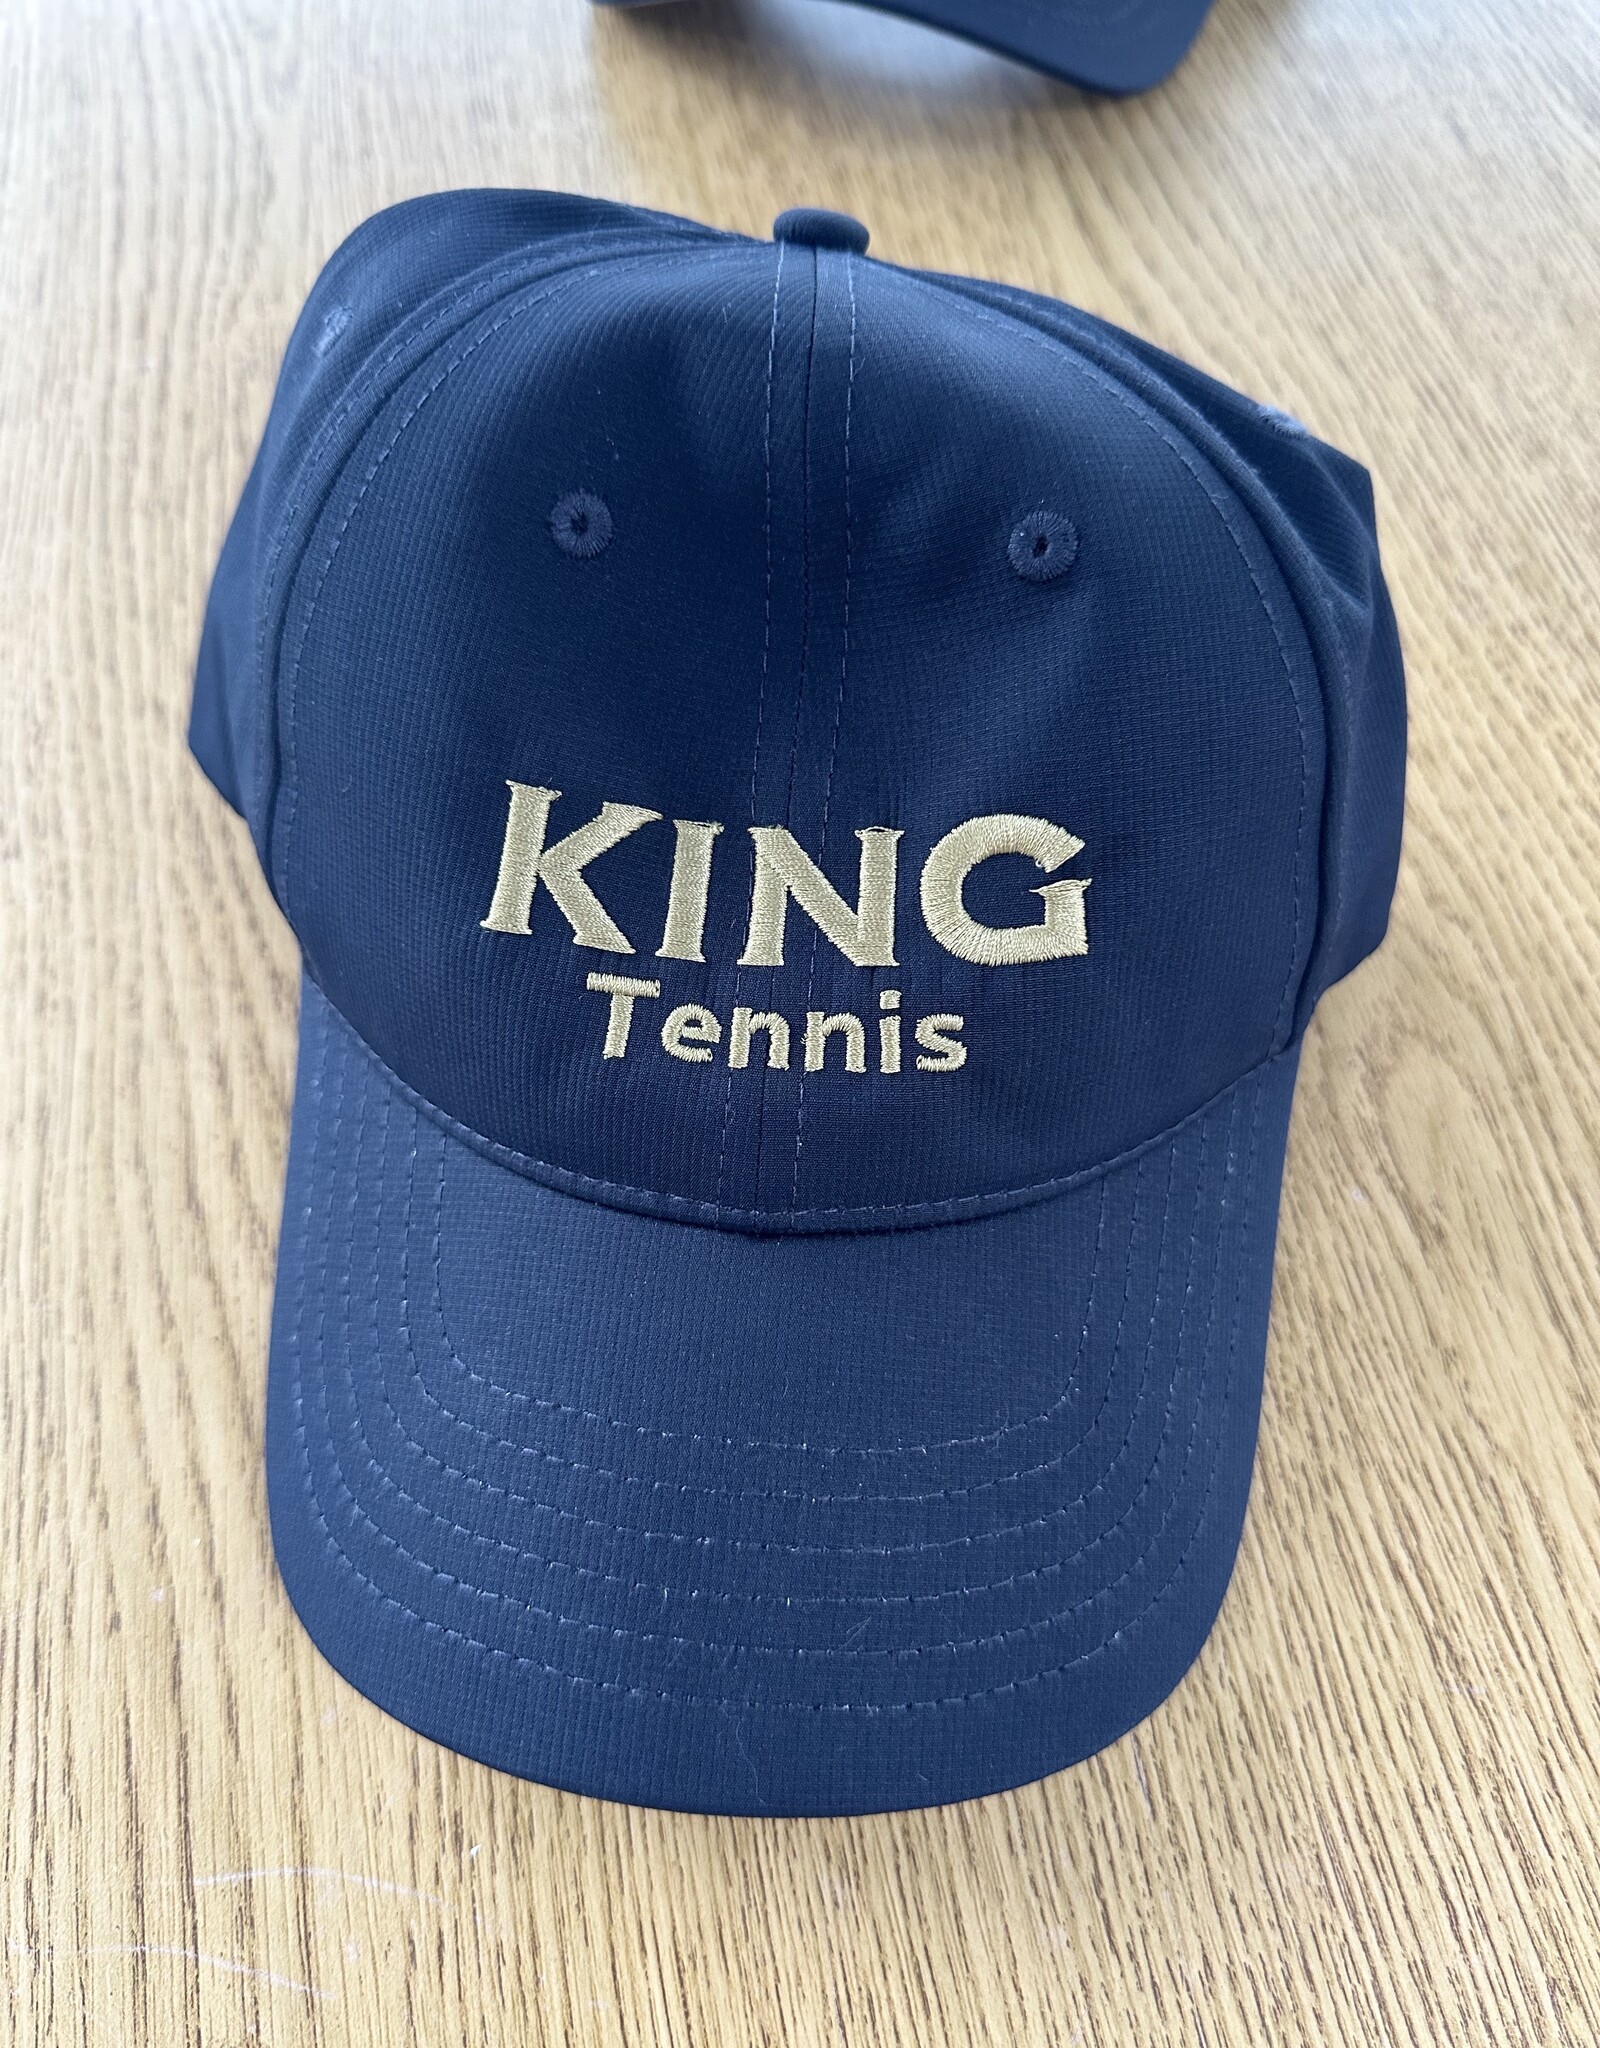 Tennis Performance Cap